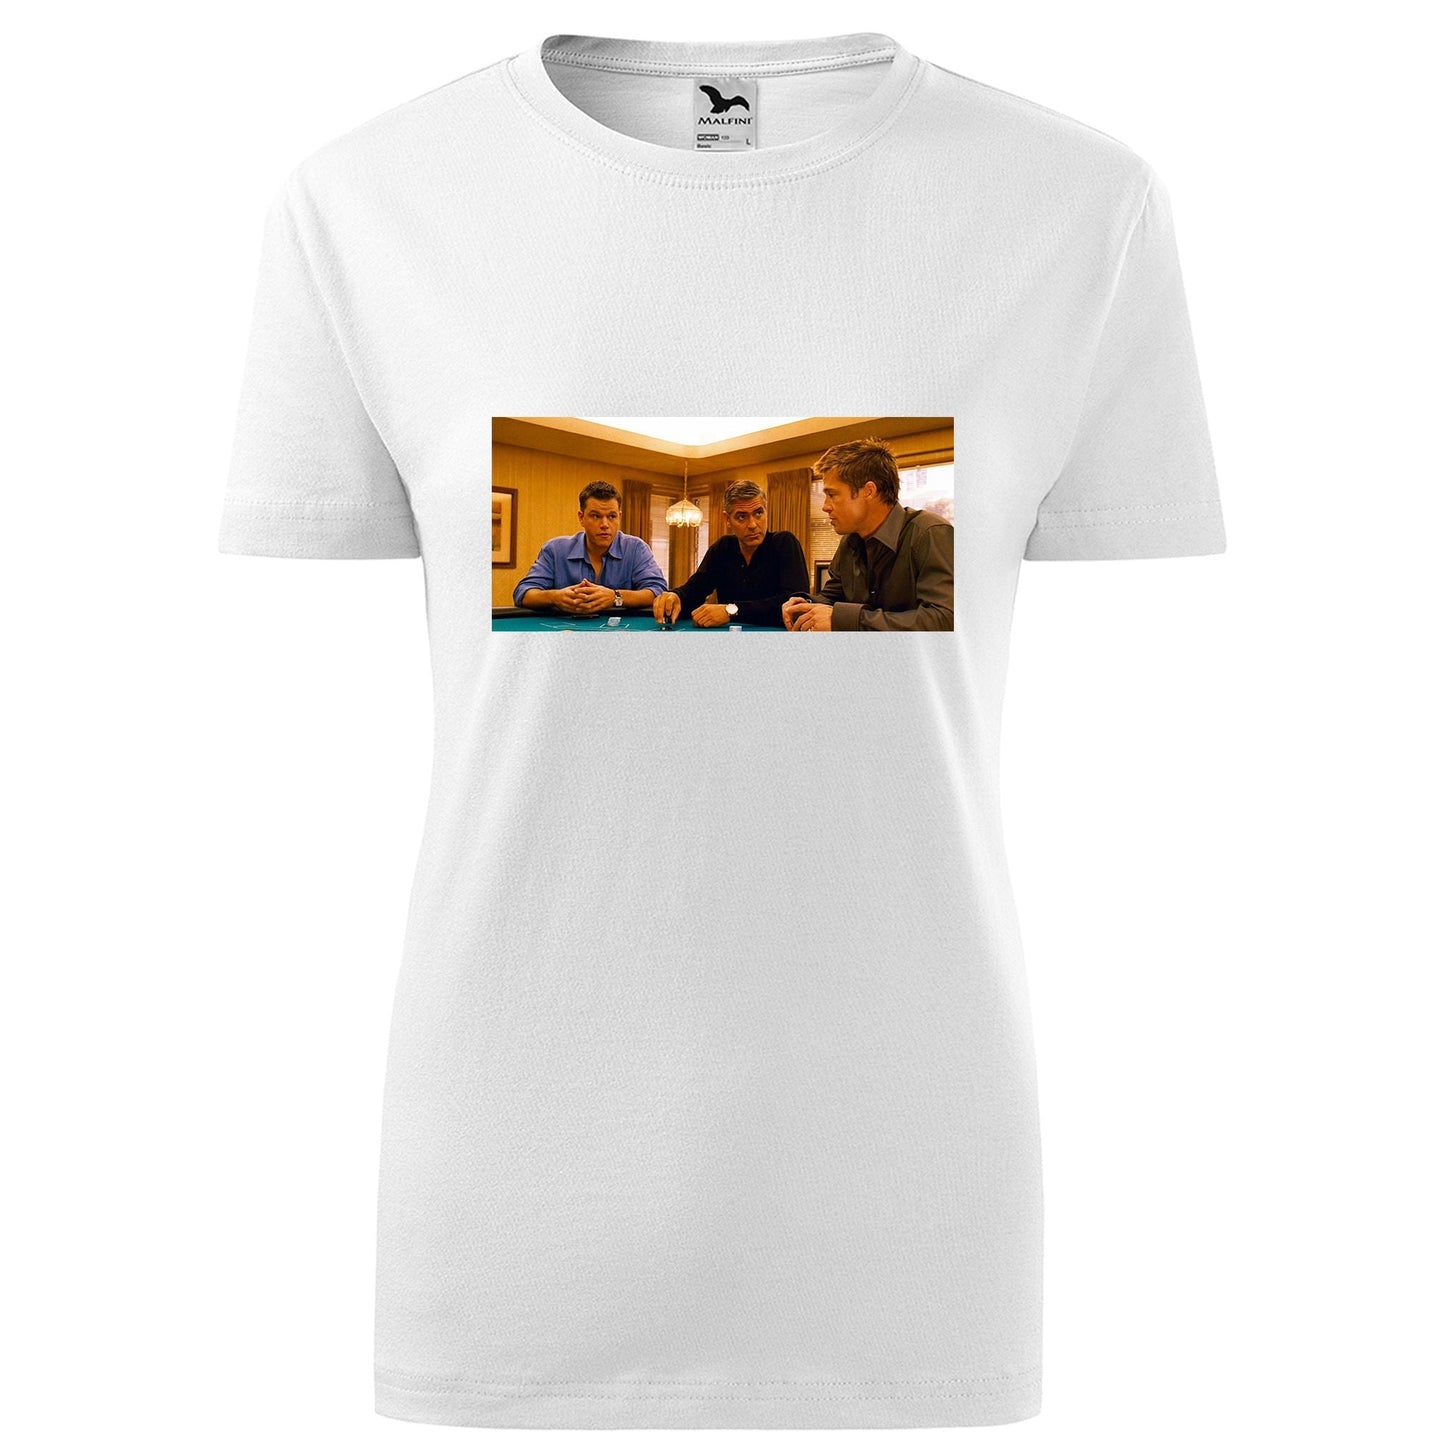 Oceans eleven t-shirt - rvdesignprint